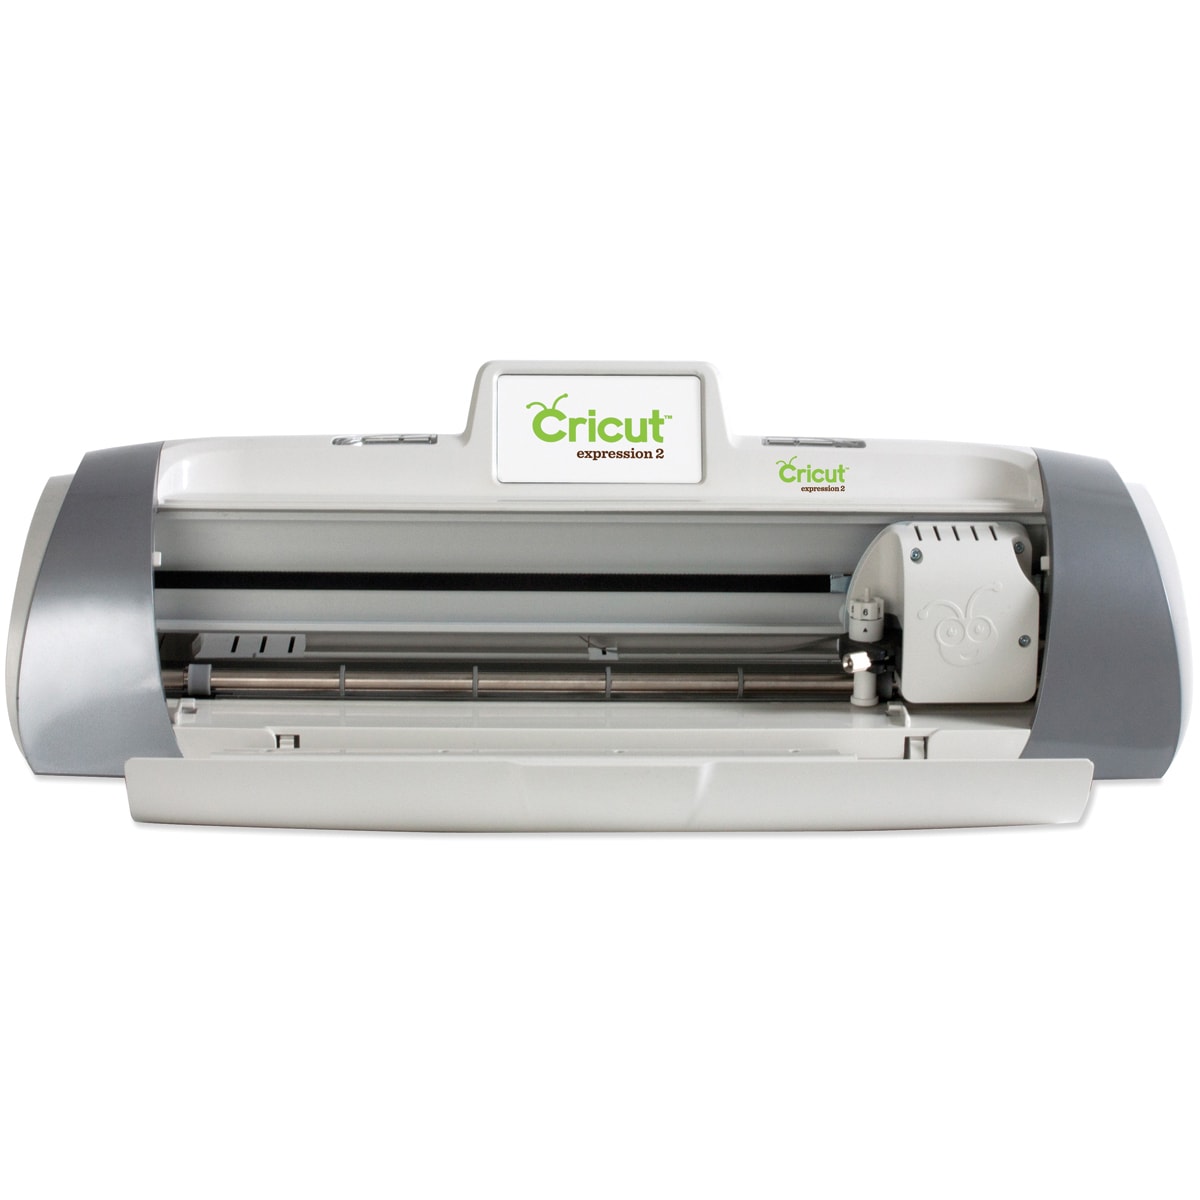 Cricut Expression Electronic Cutting Machine with 2 Cartridges $169.88  Shipped (reg. $499.99!)